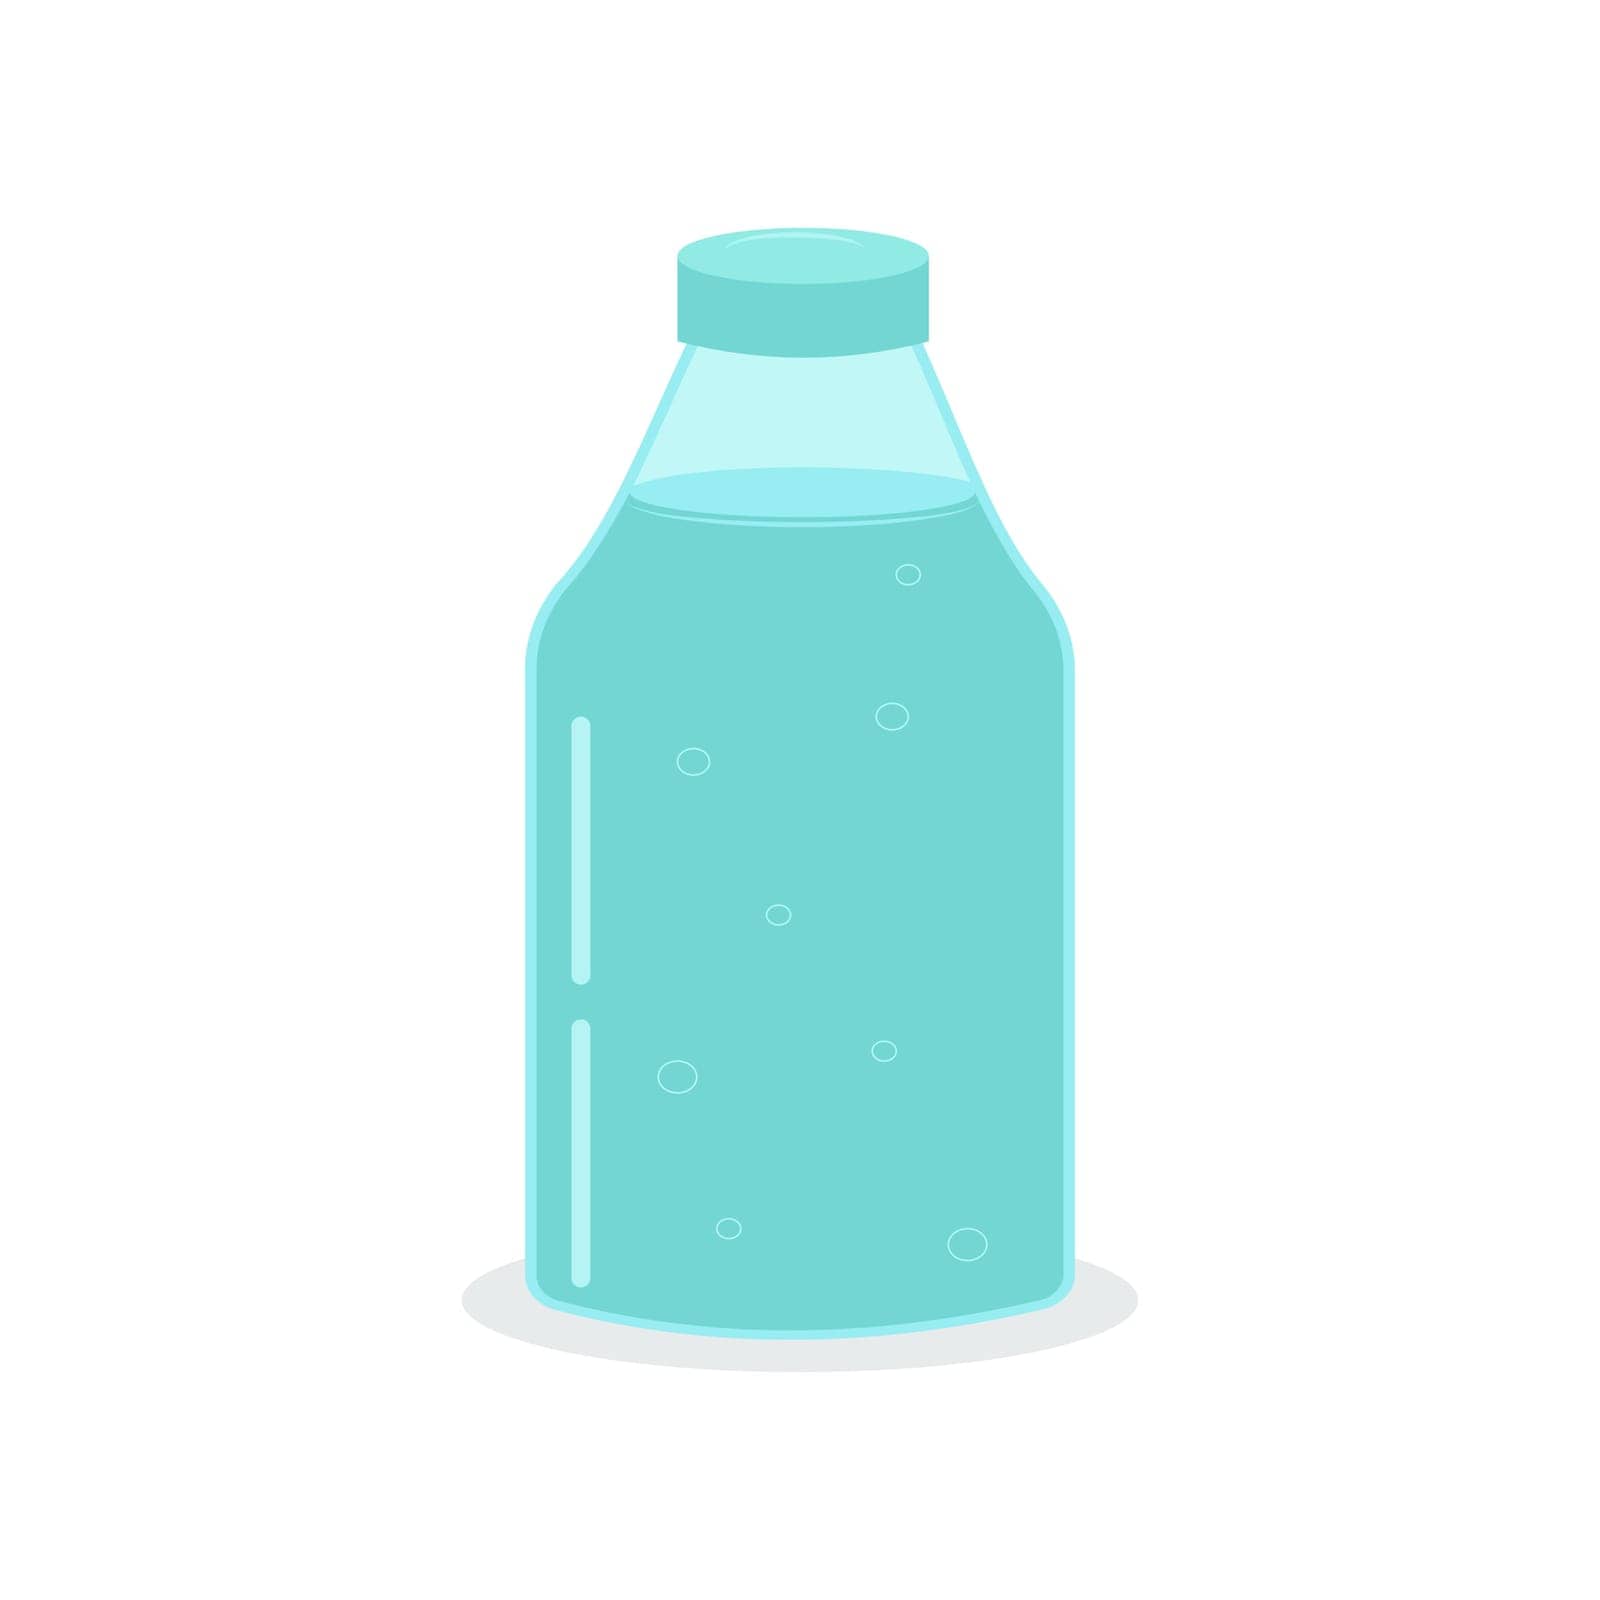 A bottle of clean fresh drinking water. by Veranikas